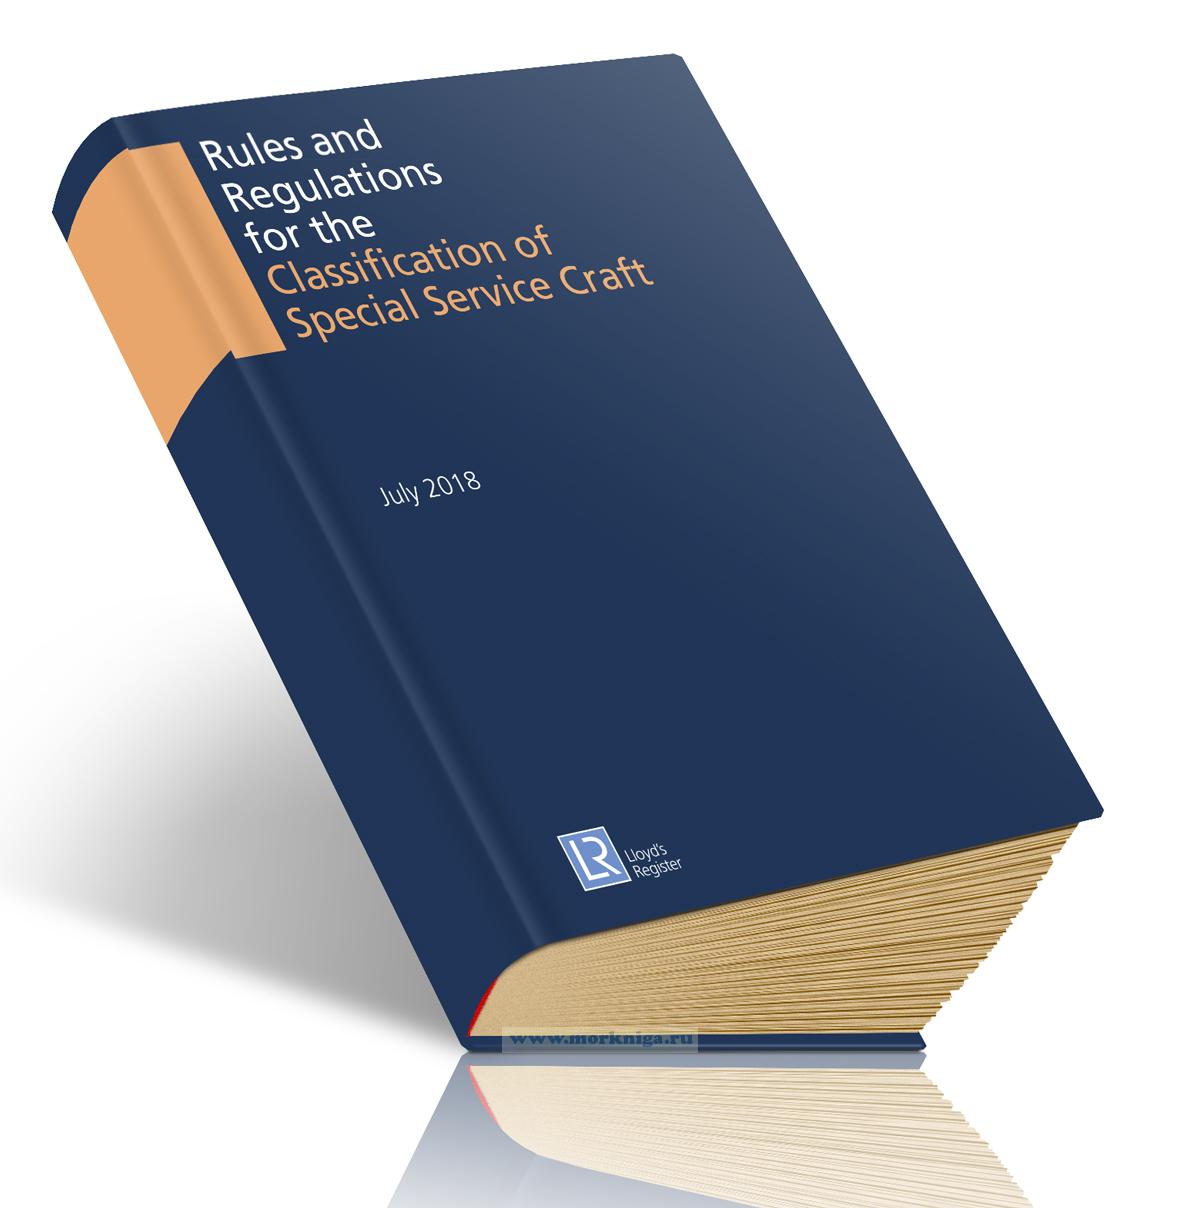 Rules and Regulations for the Classification of Special Service Craft/Правила и положения по классификации судов специального назначения